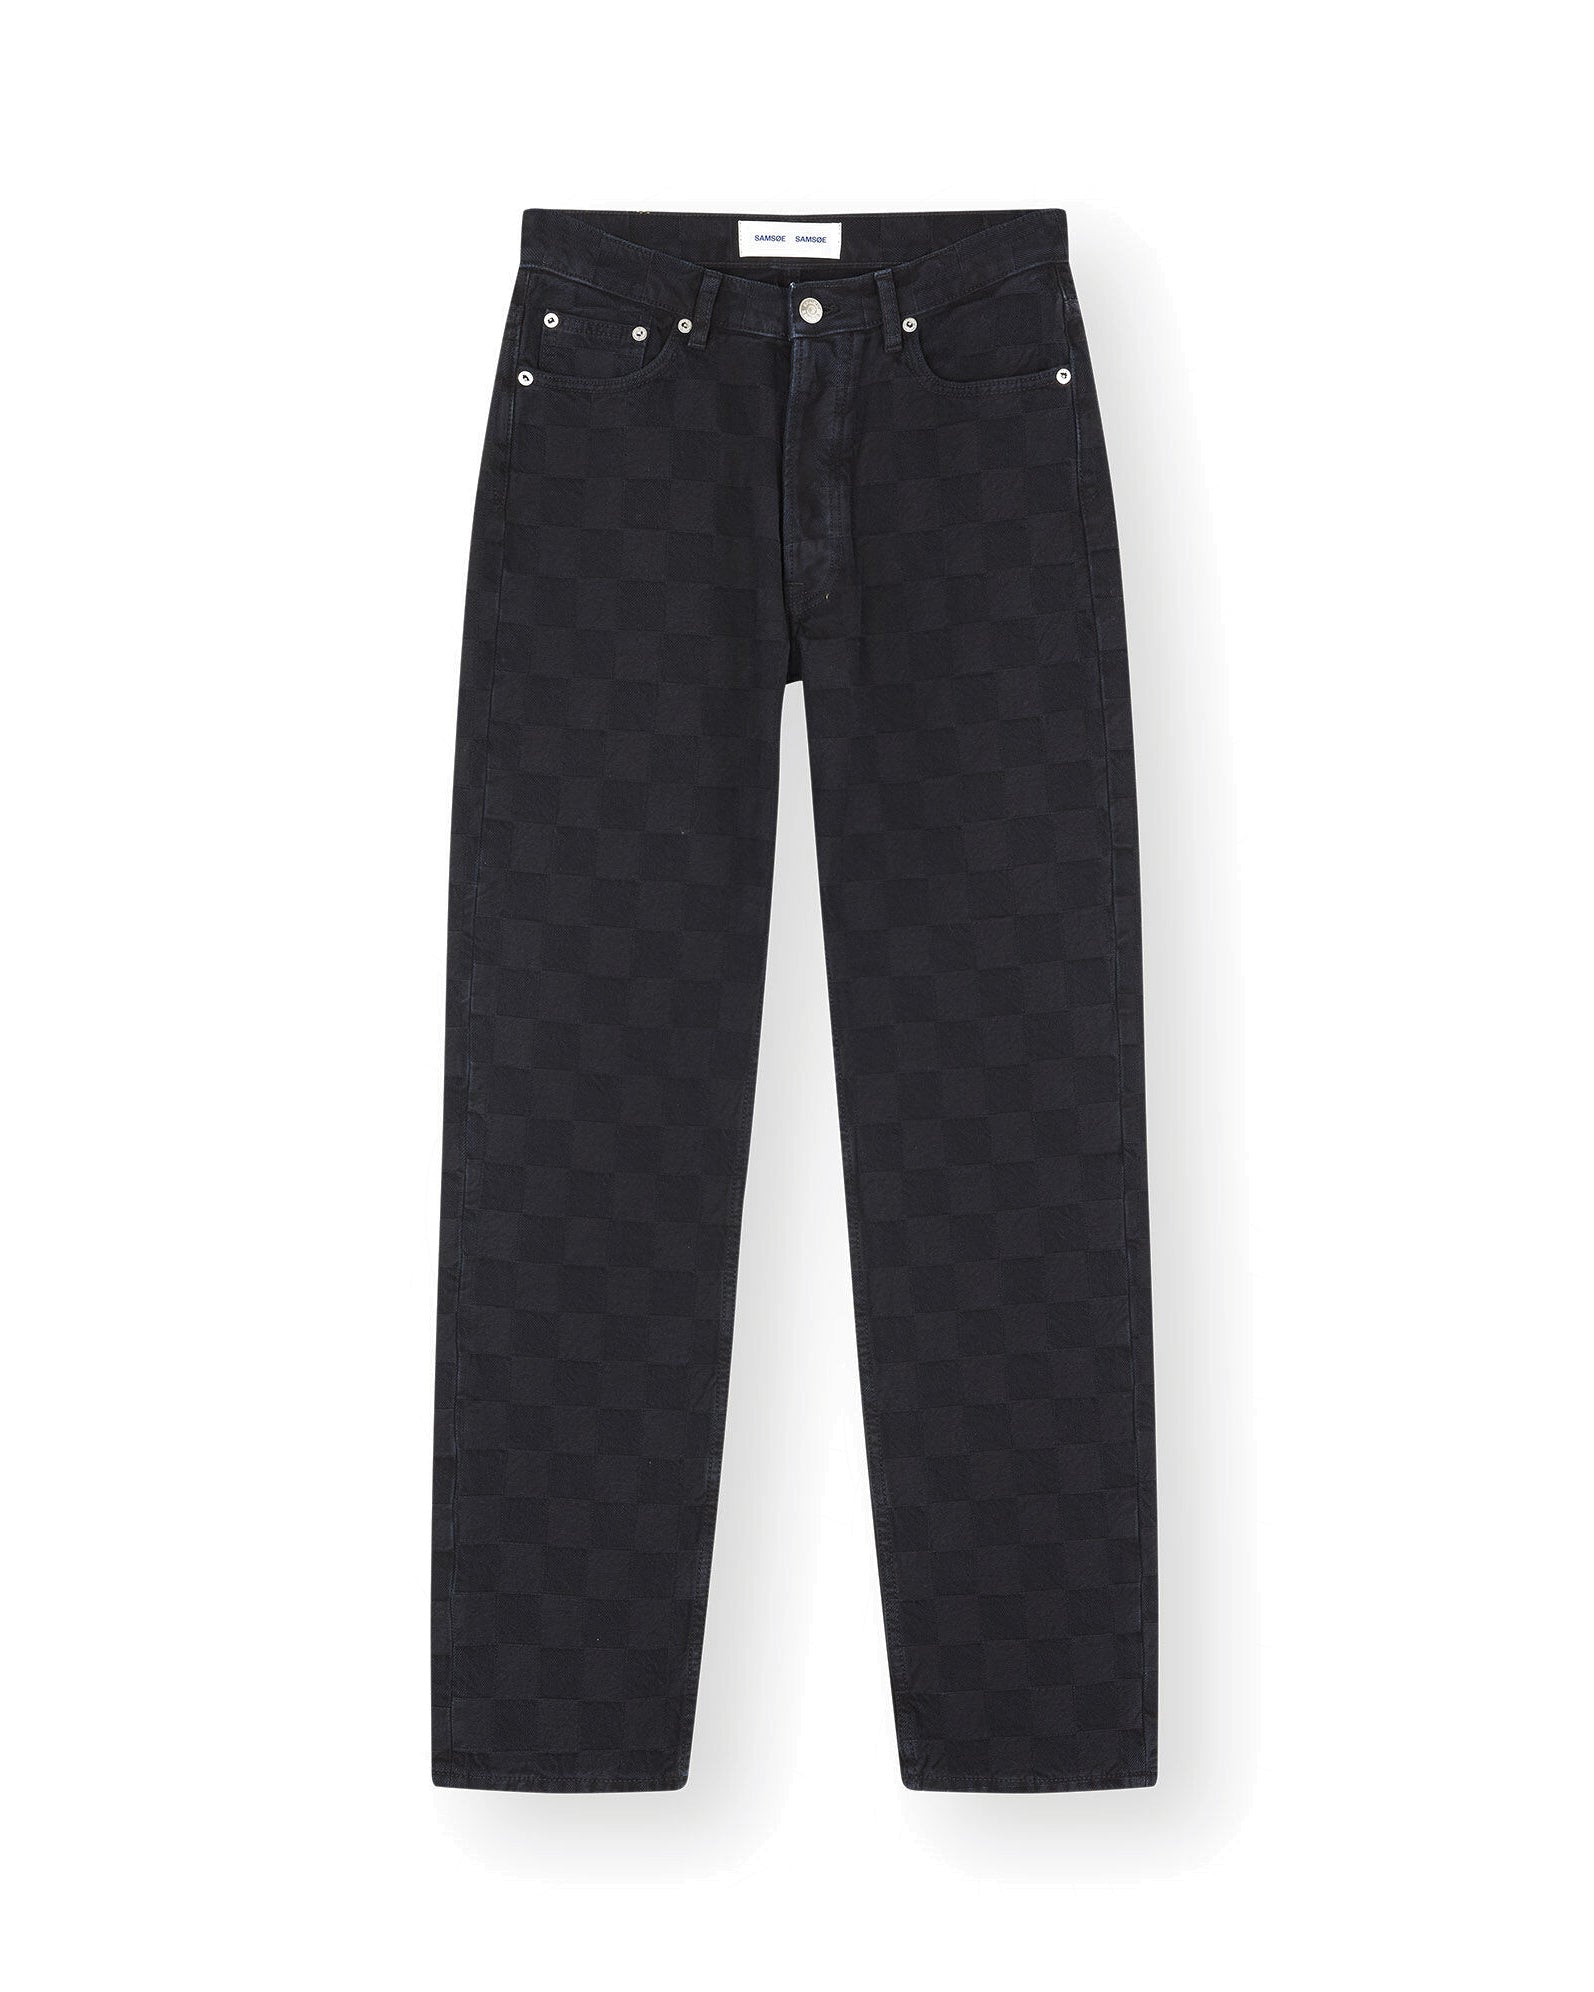 Susan jeans 14956 - Black od check